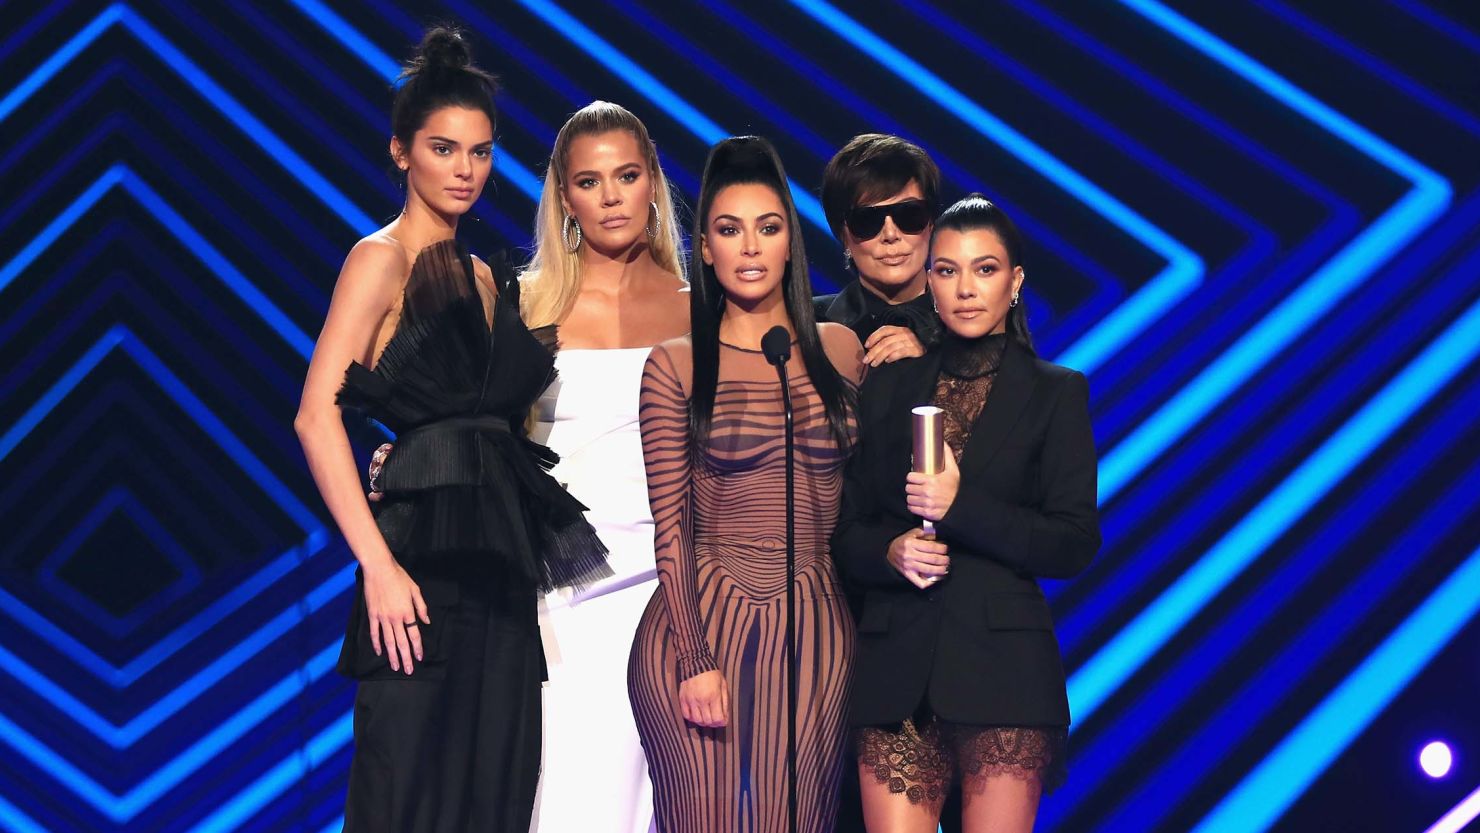 Kendall Jenner, Khloe Kardashian, Kim Kardashian West, Kris Jenner, and Kourtney Kardashian accept the The Reality Show of 2018 award for during the 2018 E! People's Choice Awards held at the Barker Hangar on November 11, 2018. 